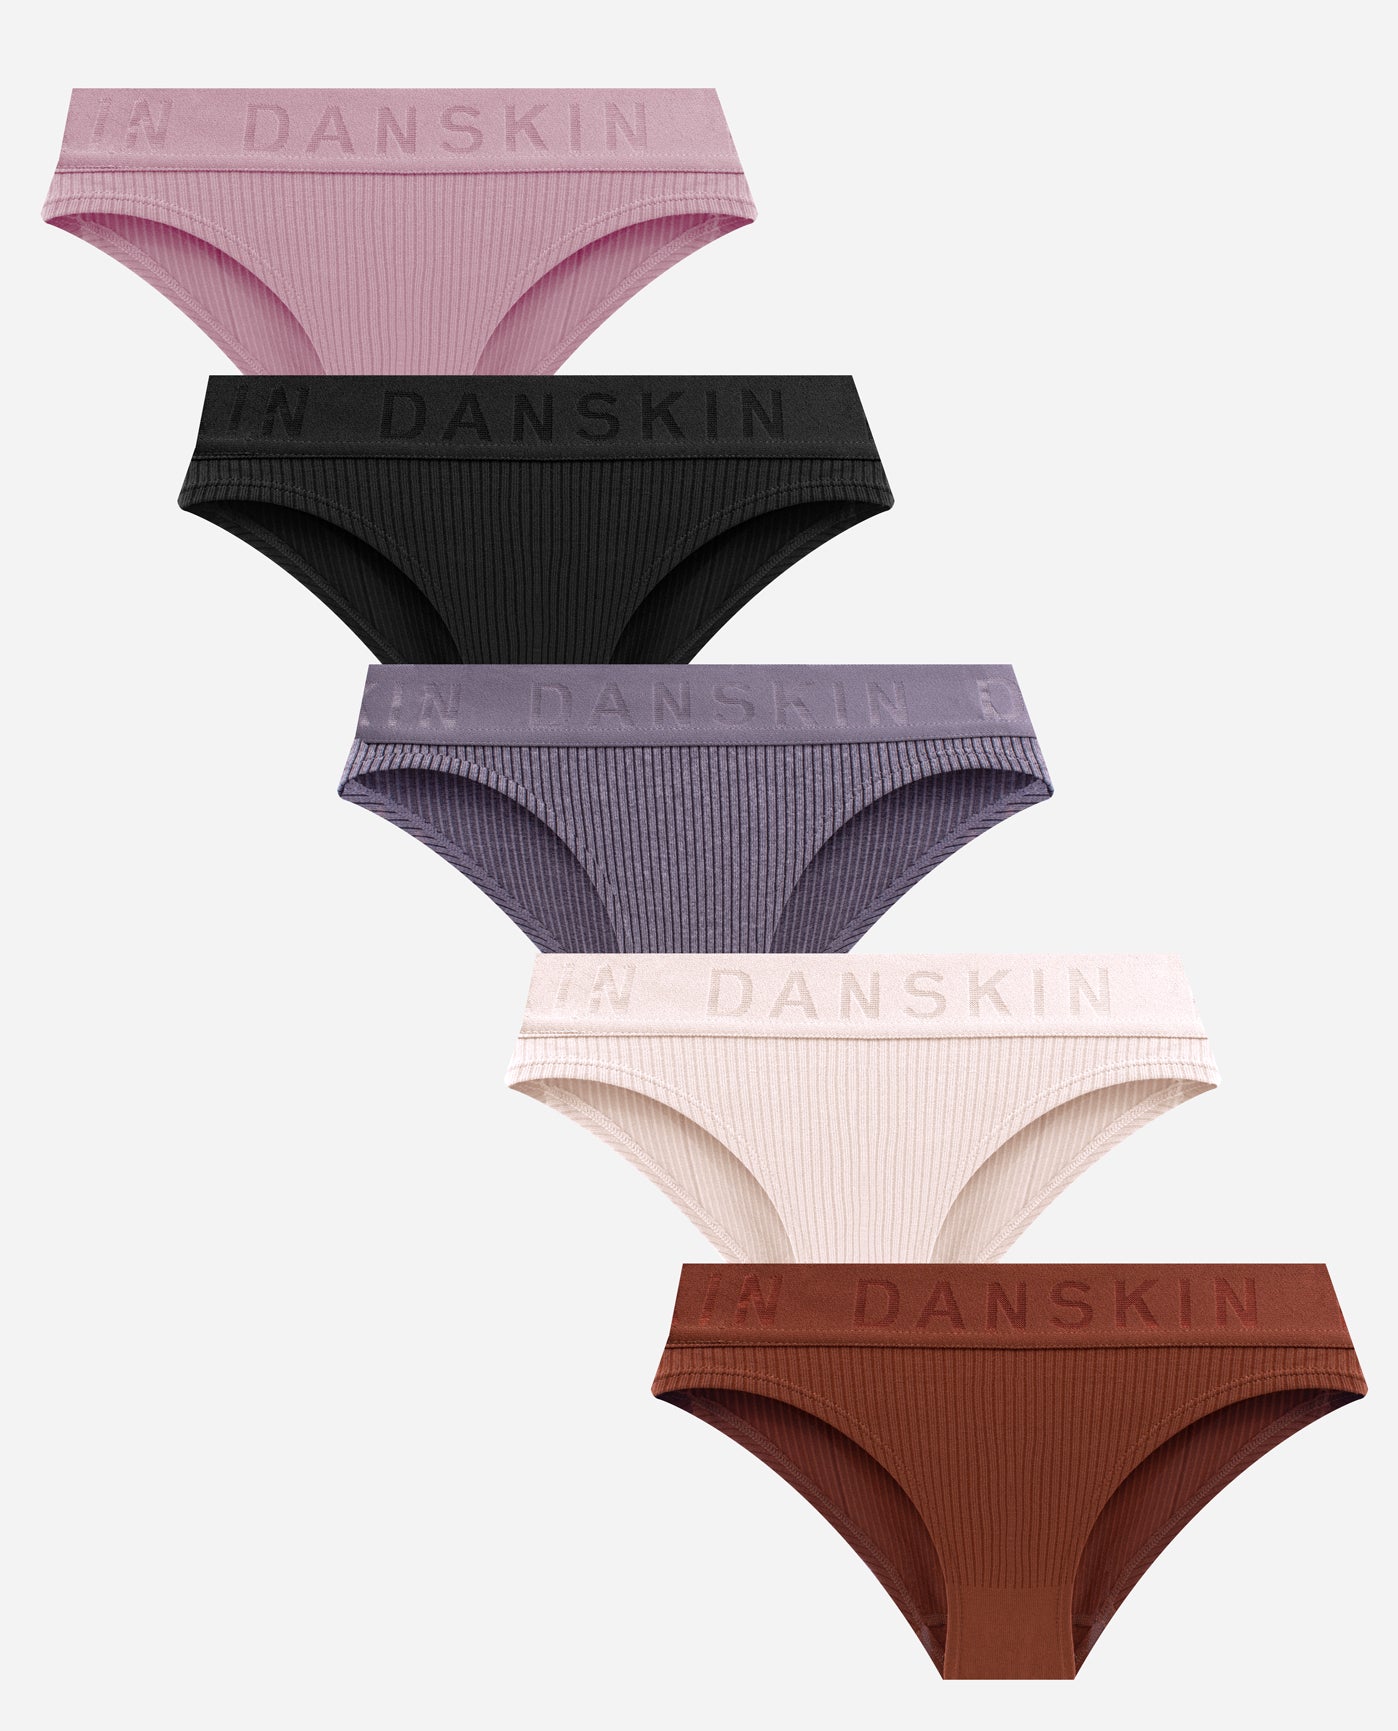 Danskin, Intimates & Sleepwear, Brown Danskin Underwear For Sale